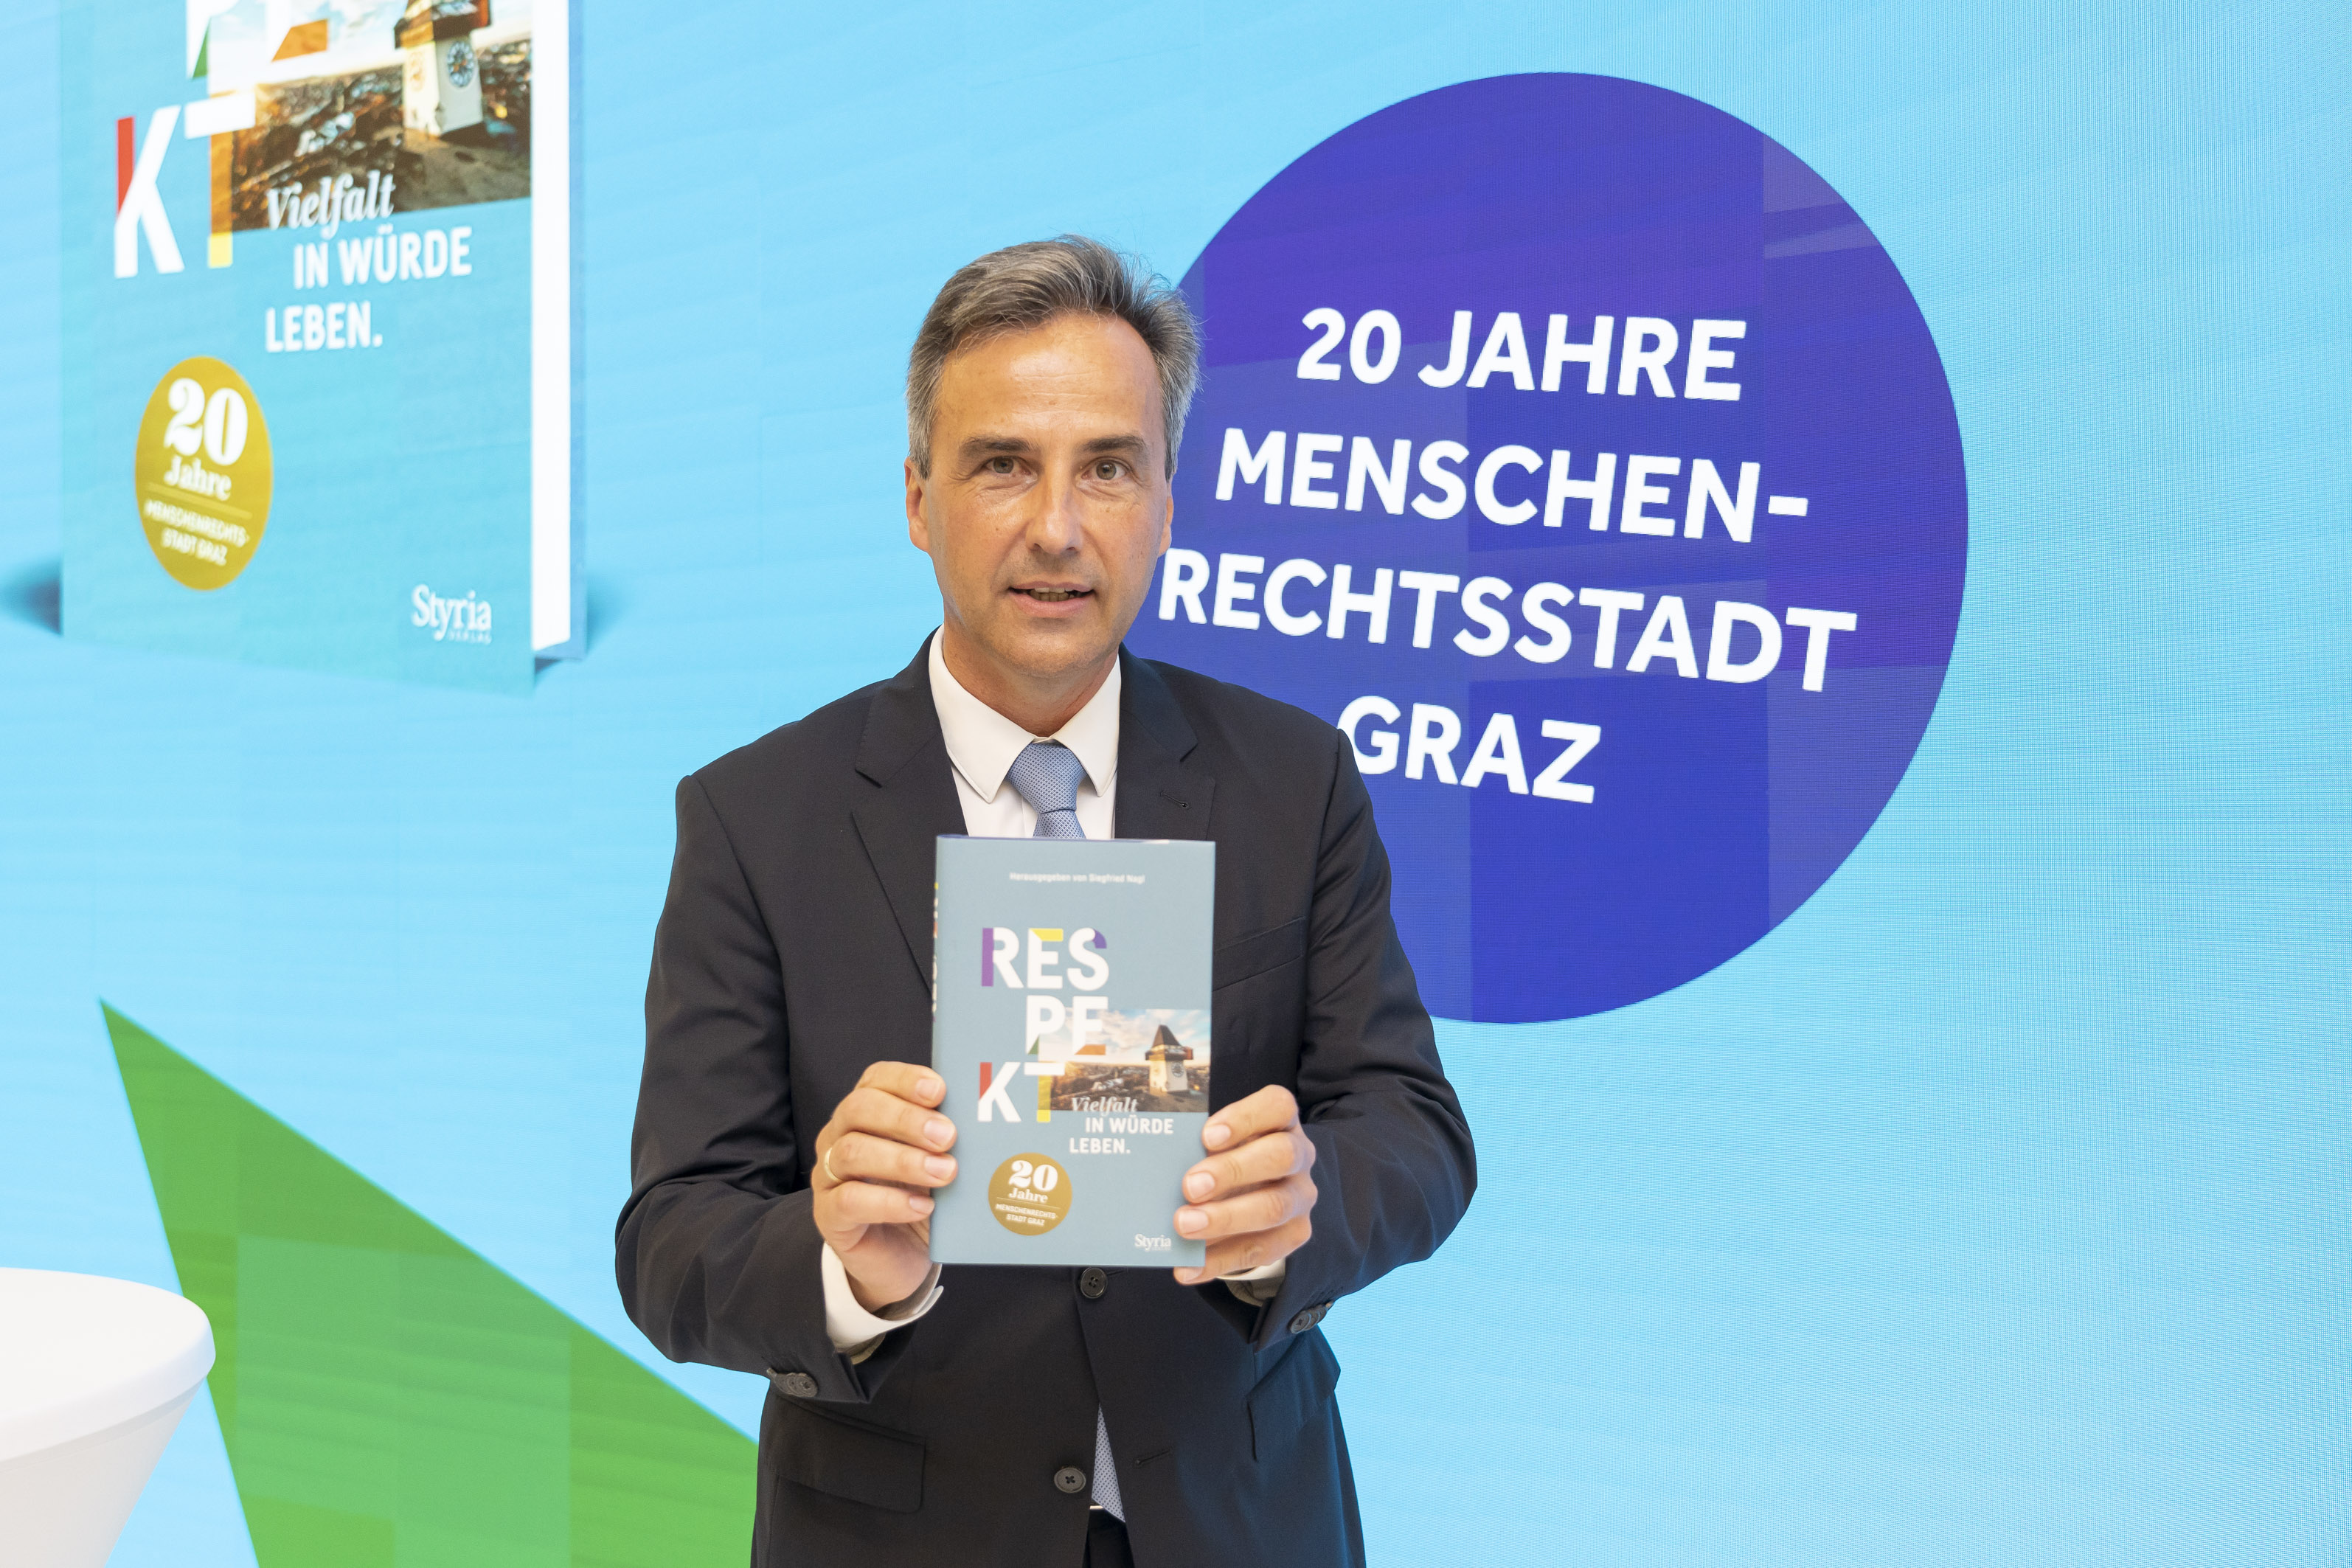 Bürgermeister Nagl mit dem Buch zu 20 Jahre Menschenrechtsstadt Graz